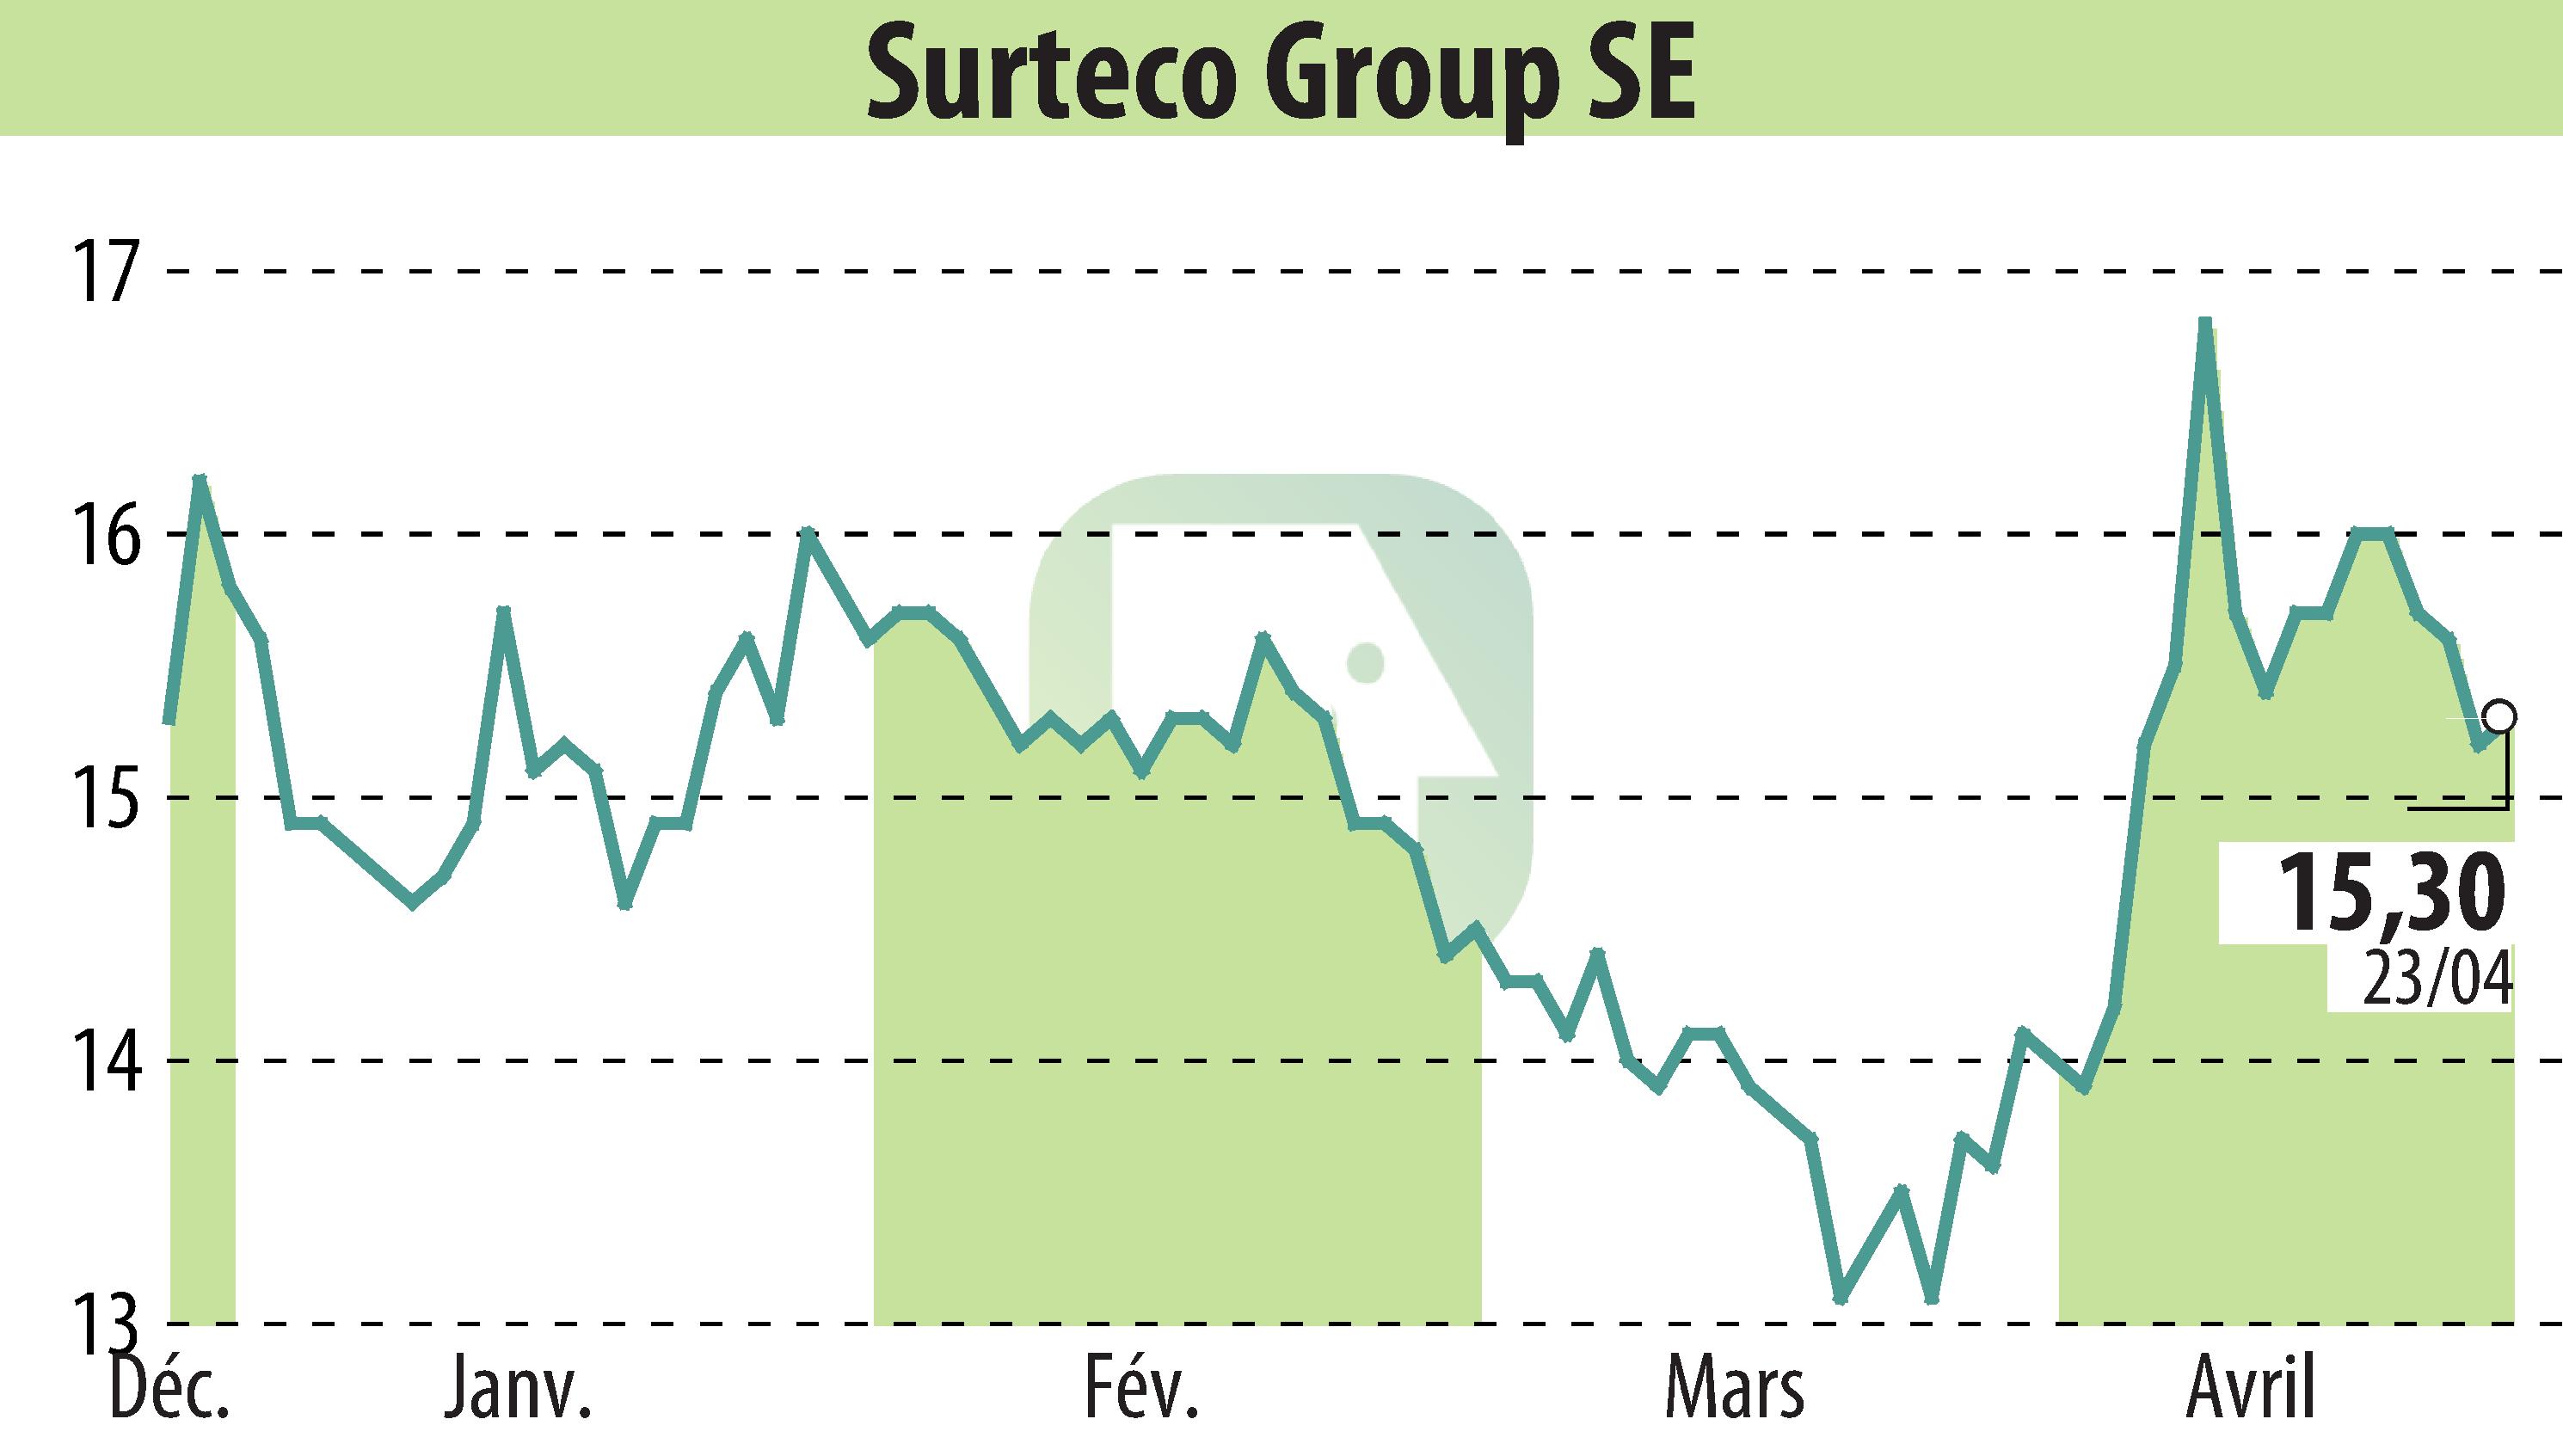 Stock price chart of SURTECO SE (EBR:SUR) showing fluctuations.